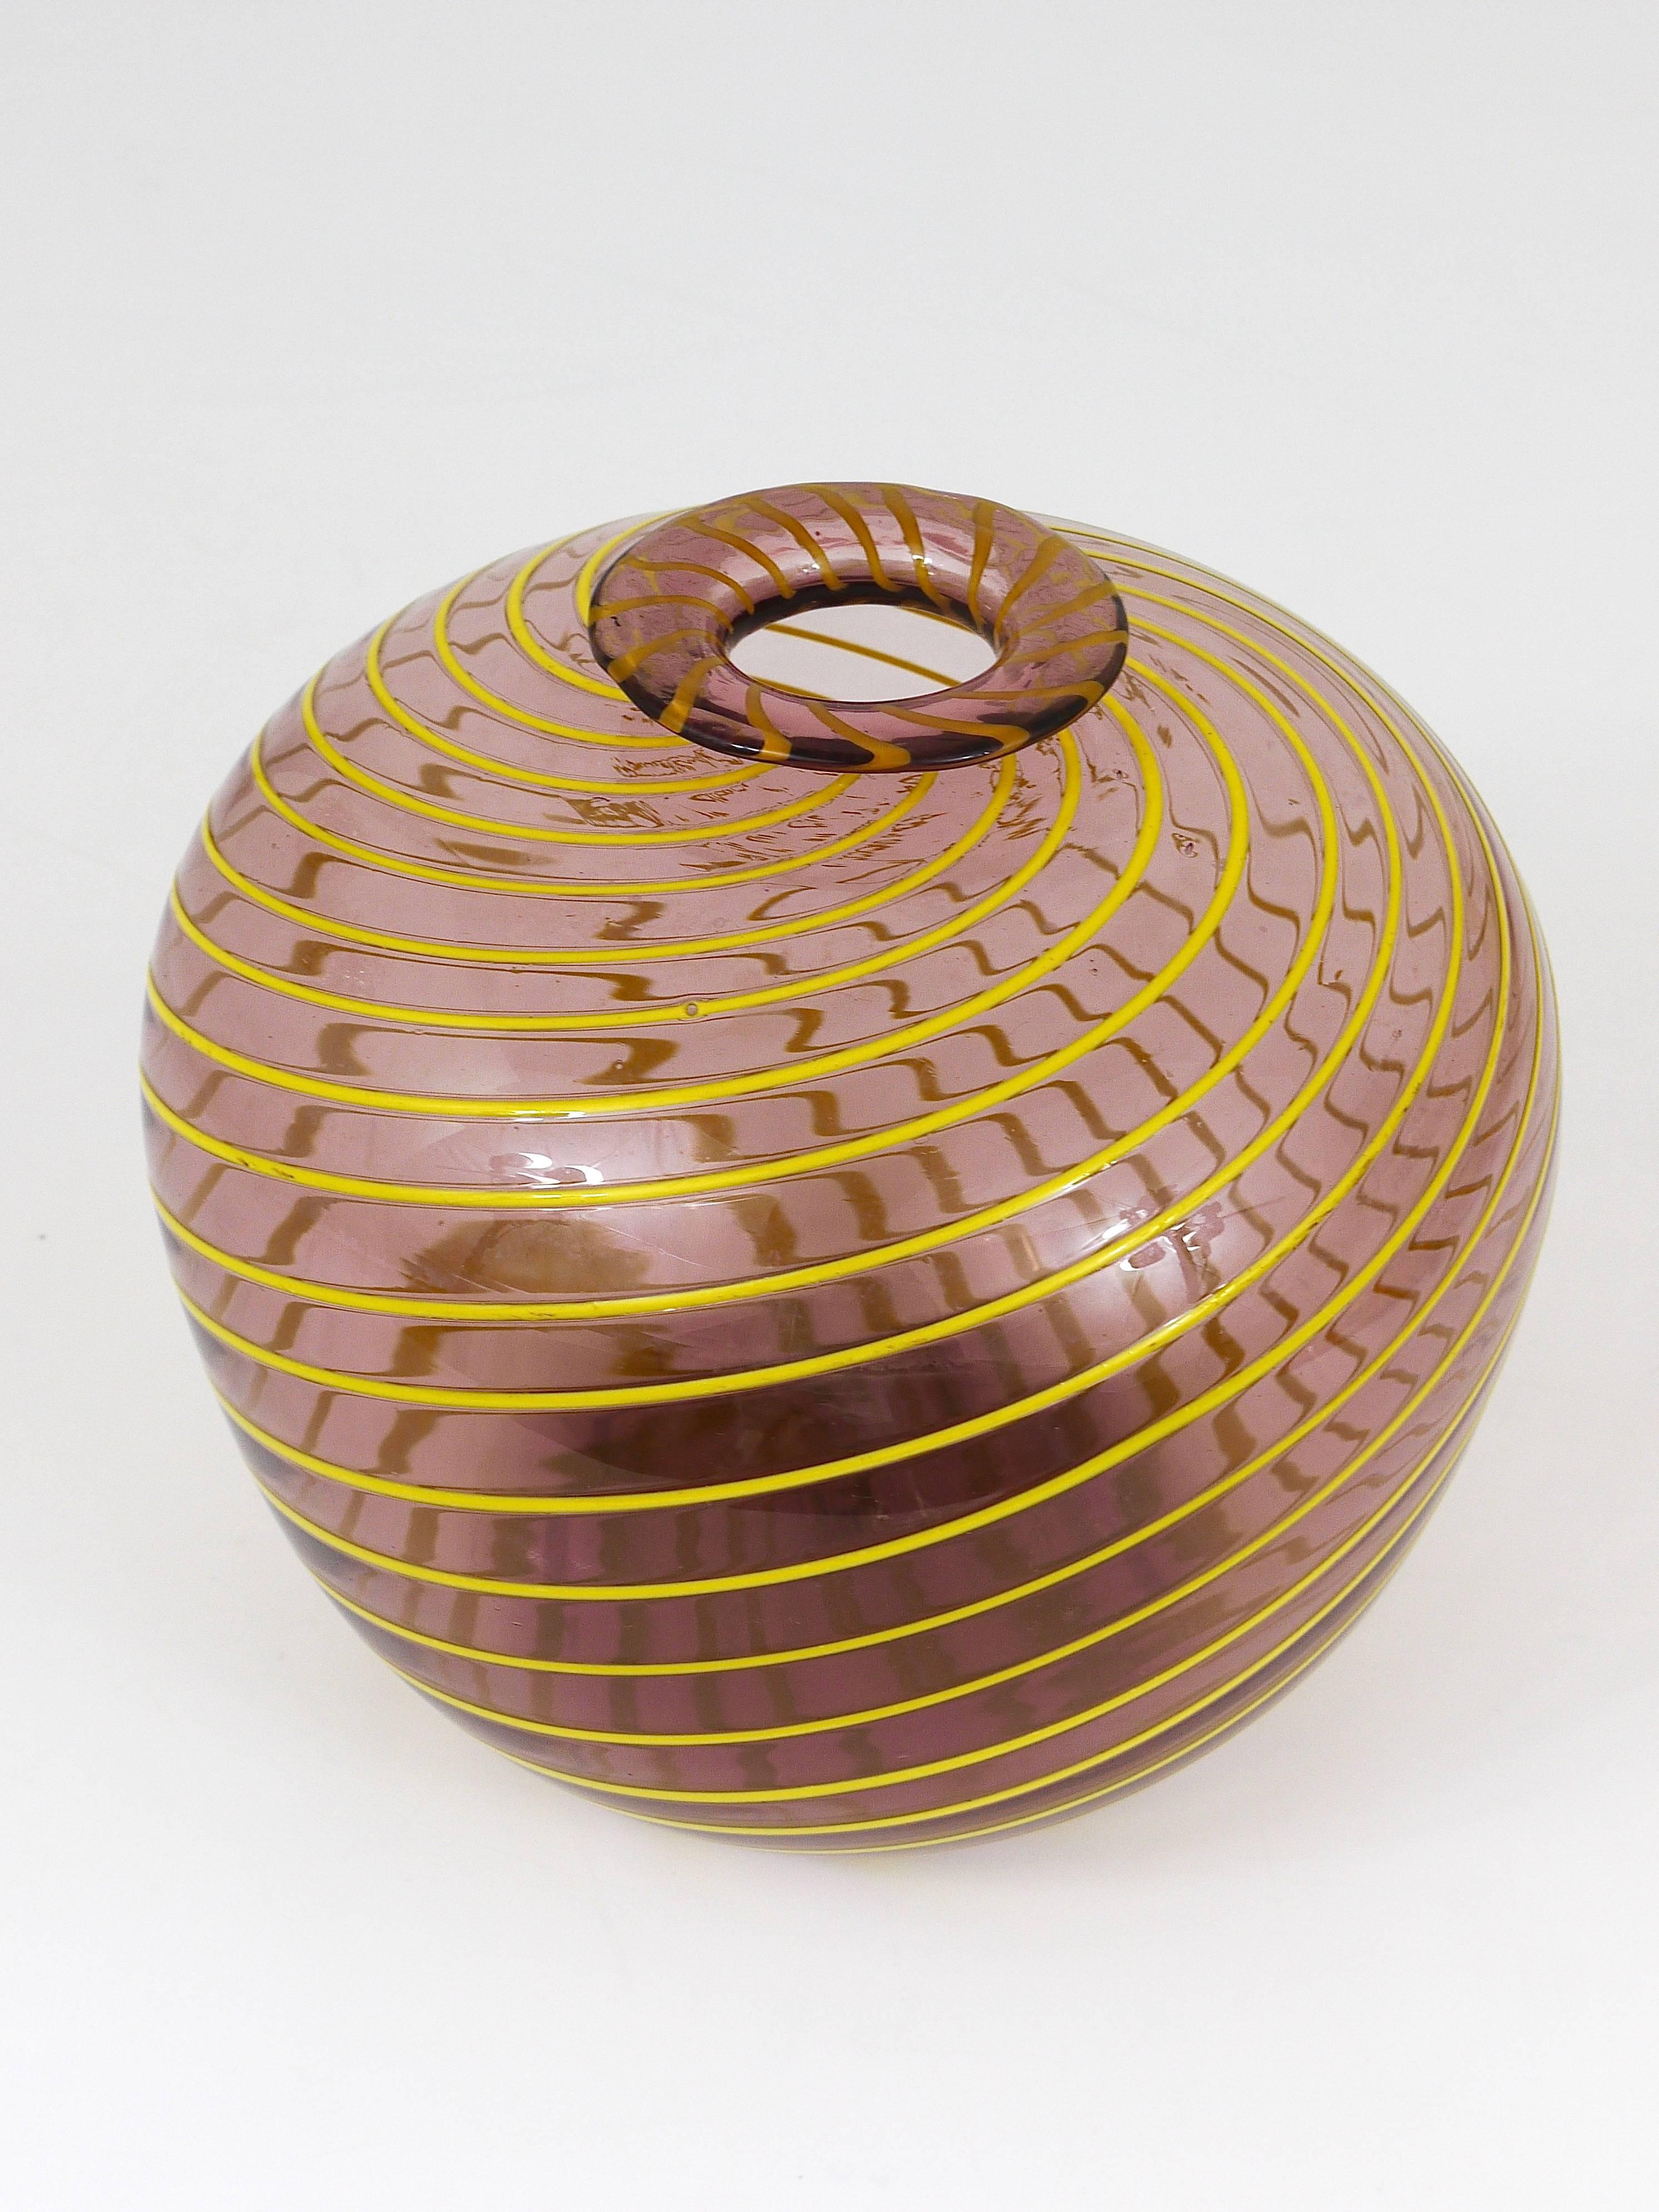 Austrian Fratelli Toso Big Purple Murano Swirl Vase with Yellow Stripes, Italy, 1950s